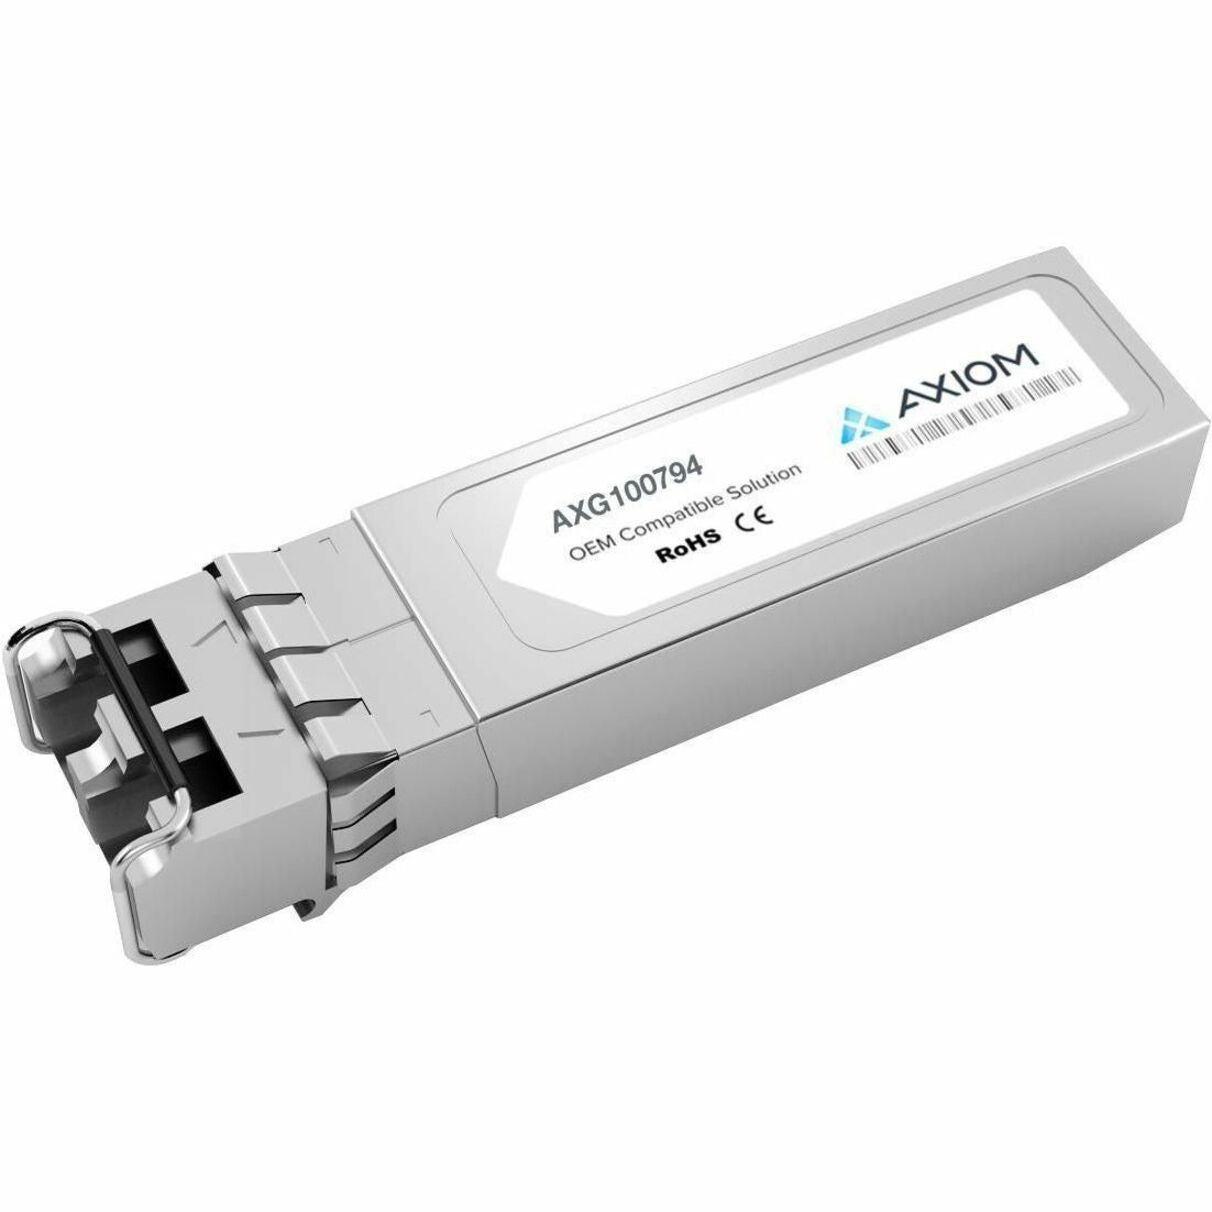 Axiom 10GBase-LR SFP+ Transceiver for Fortinet - FN-TRAN-SFP+LR - TAA Compliant (AXG100794)